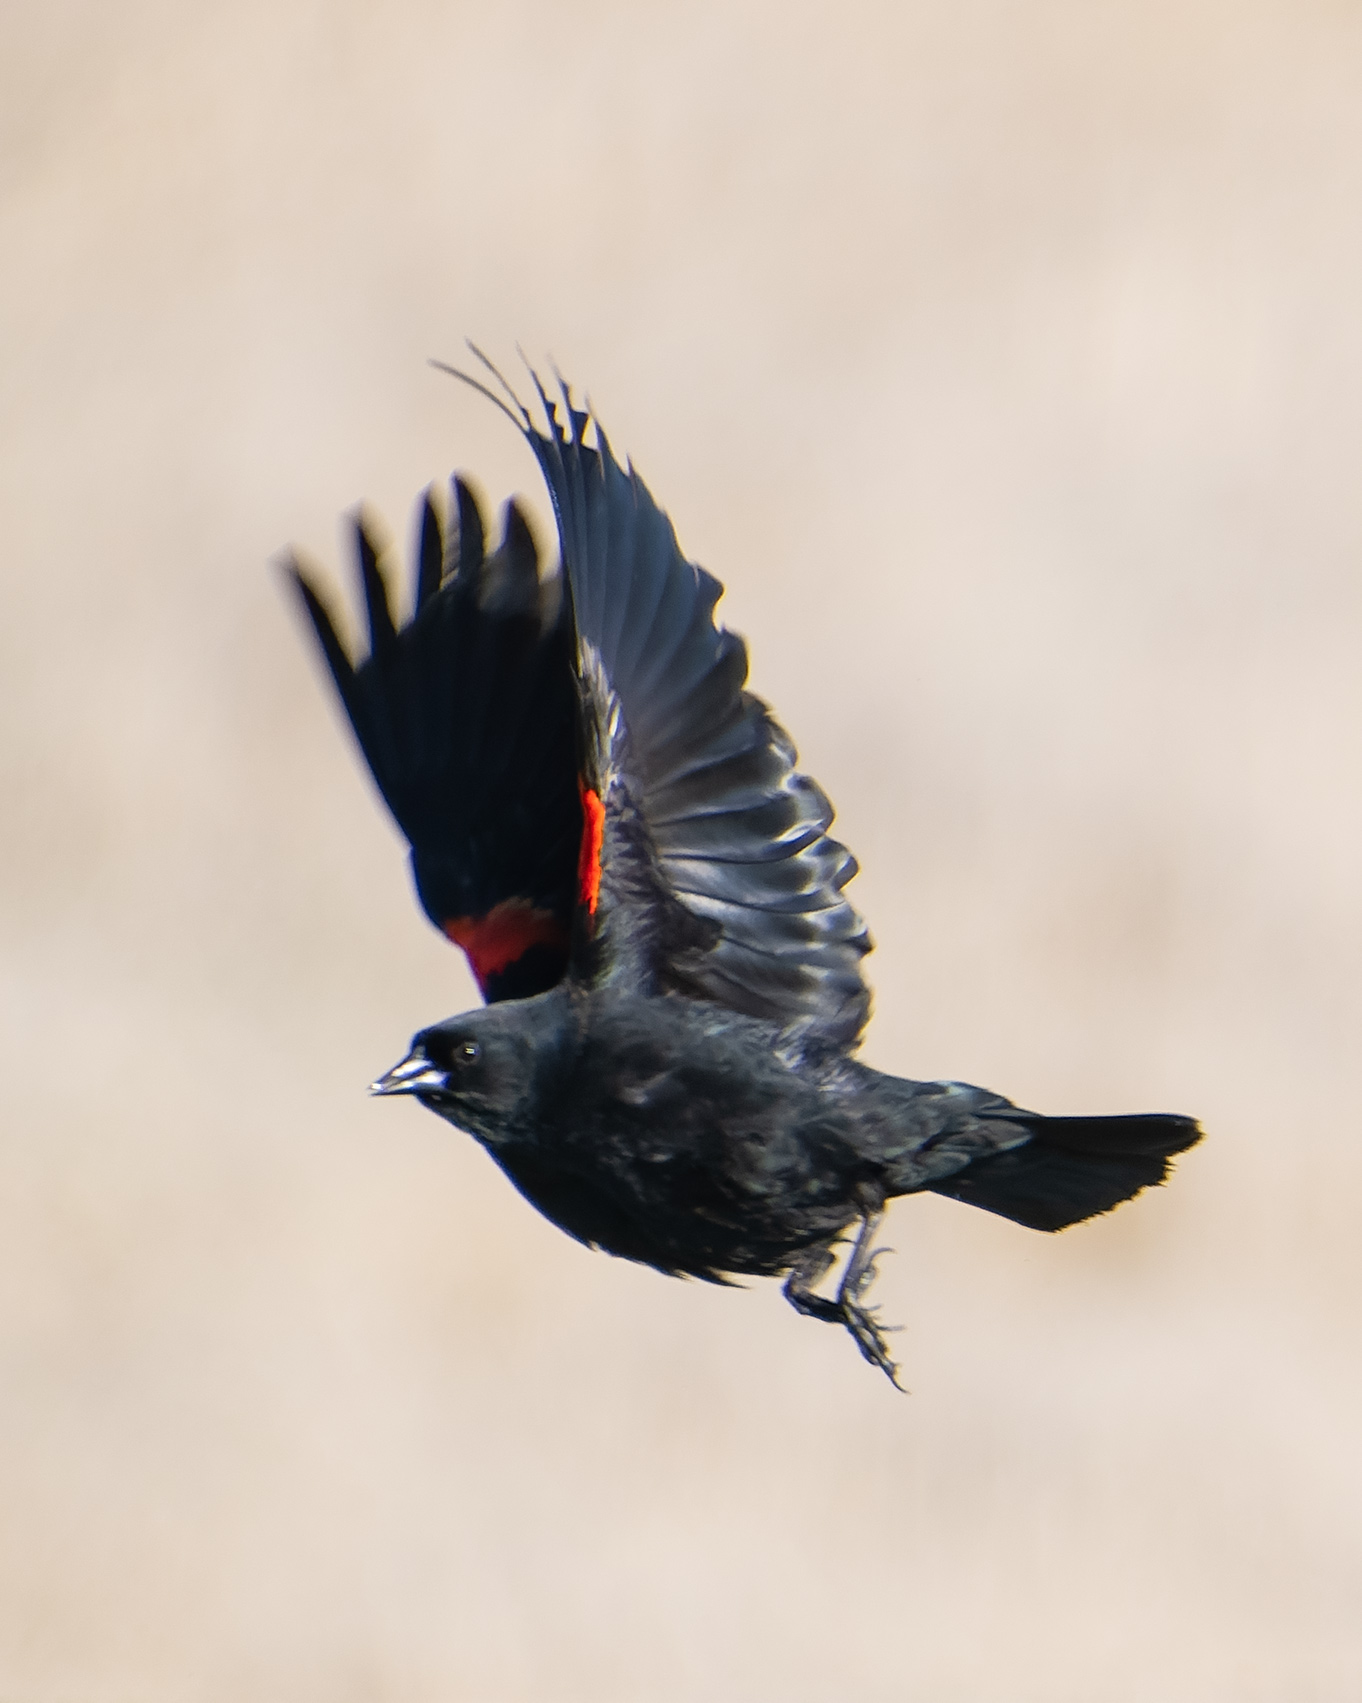 redwingblackbird.jpg